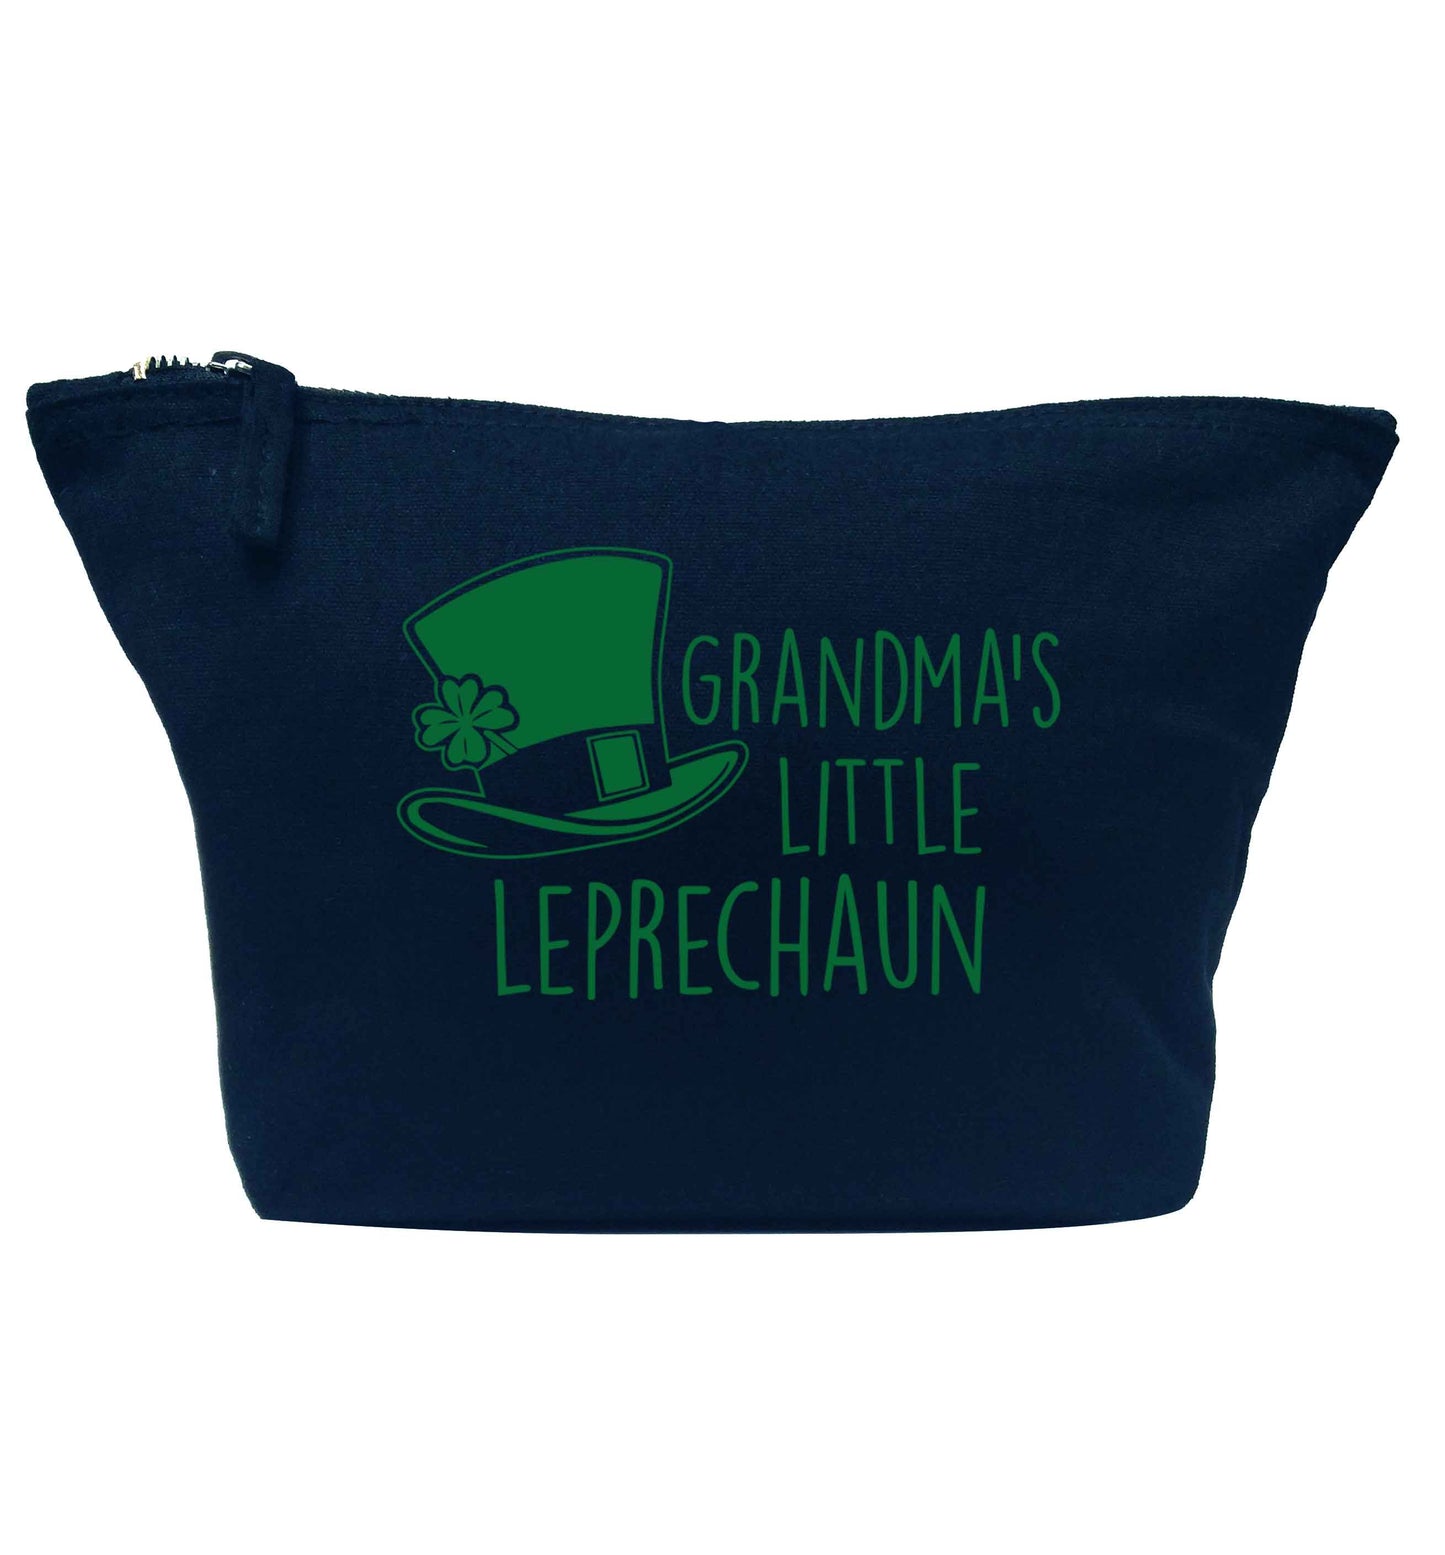 Grandma's little leprechaun navy makeup bag